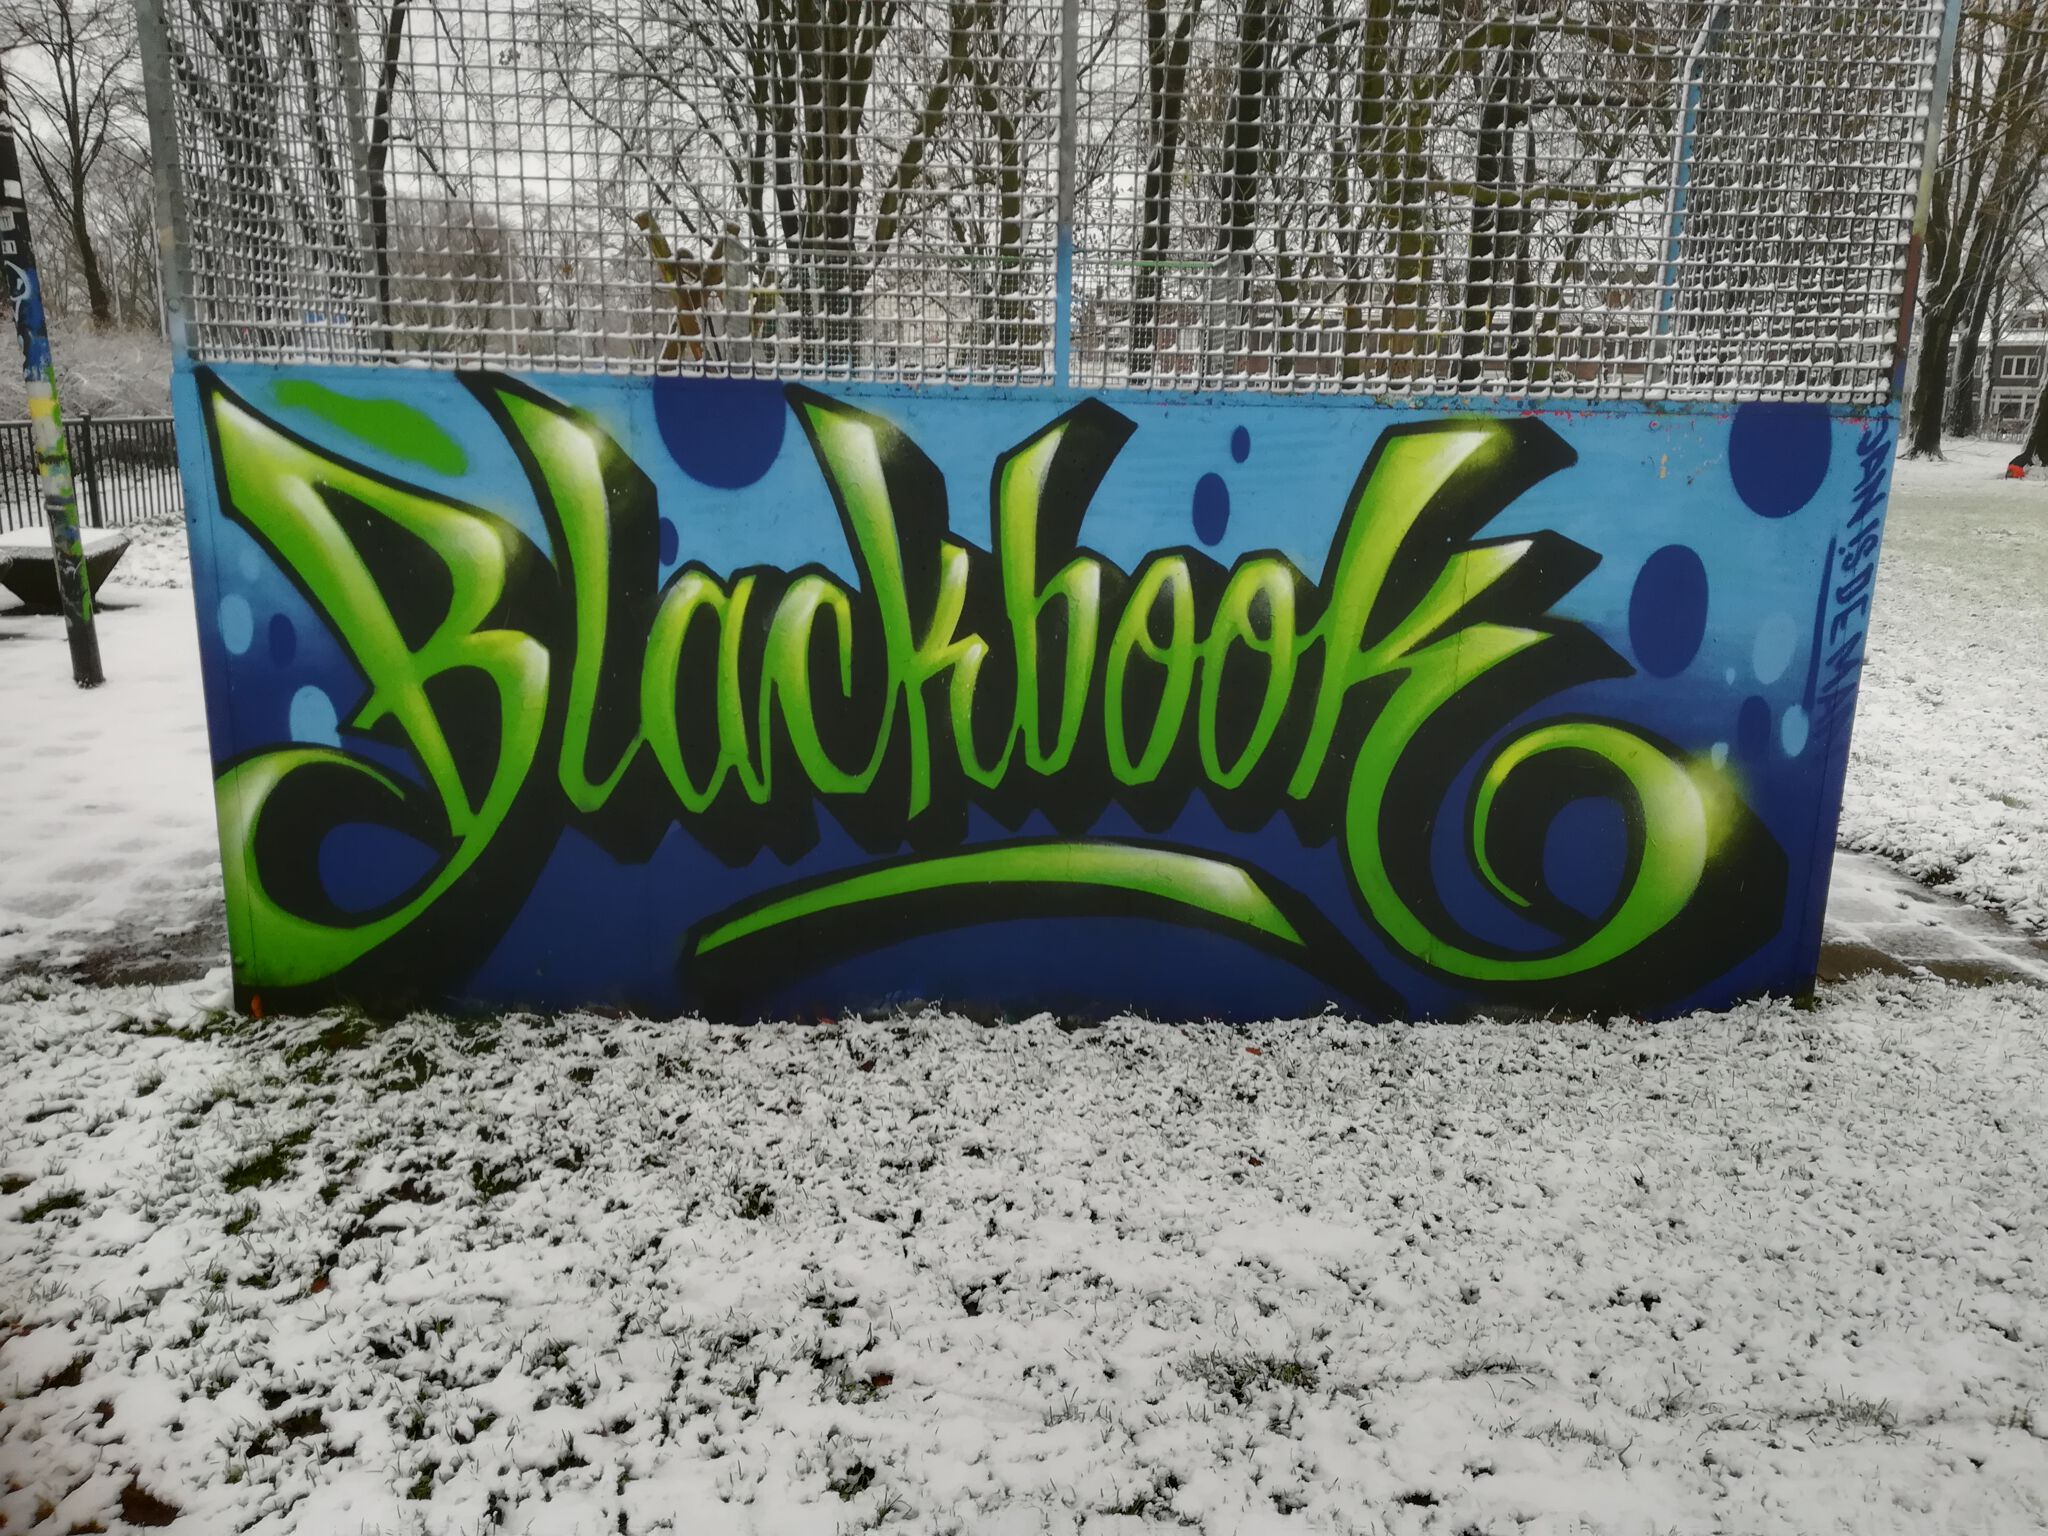 Verfdokter, Blackbook, deeffeed&mdash;Skatepark Majoor Bosshardt plantsoen 